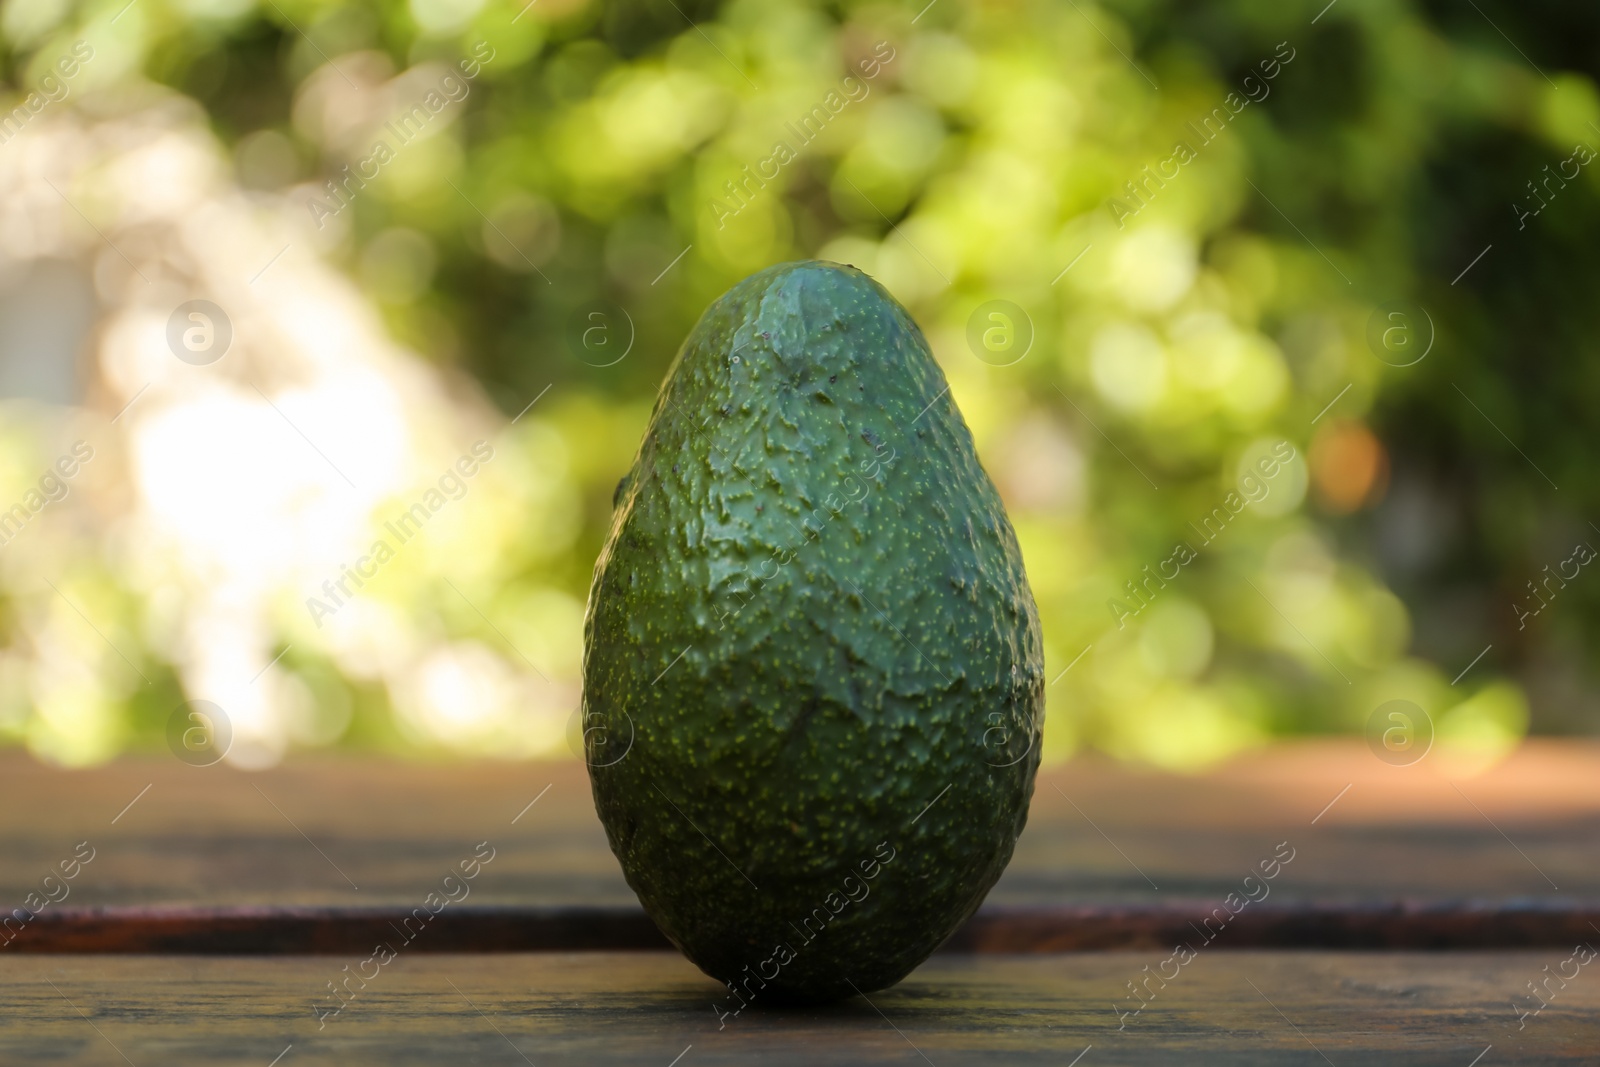 Photo of Fresh avocado on wooden table outdoors, closeup